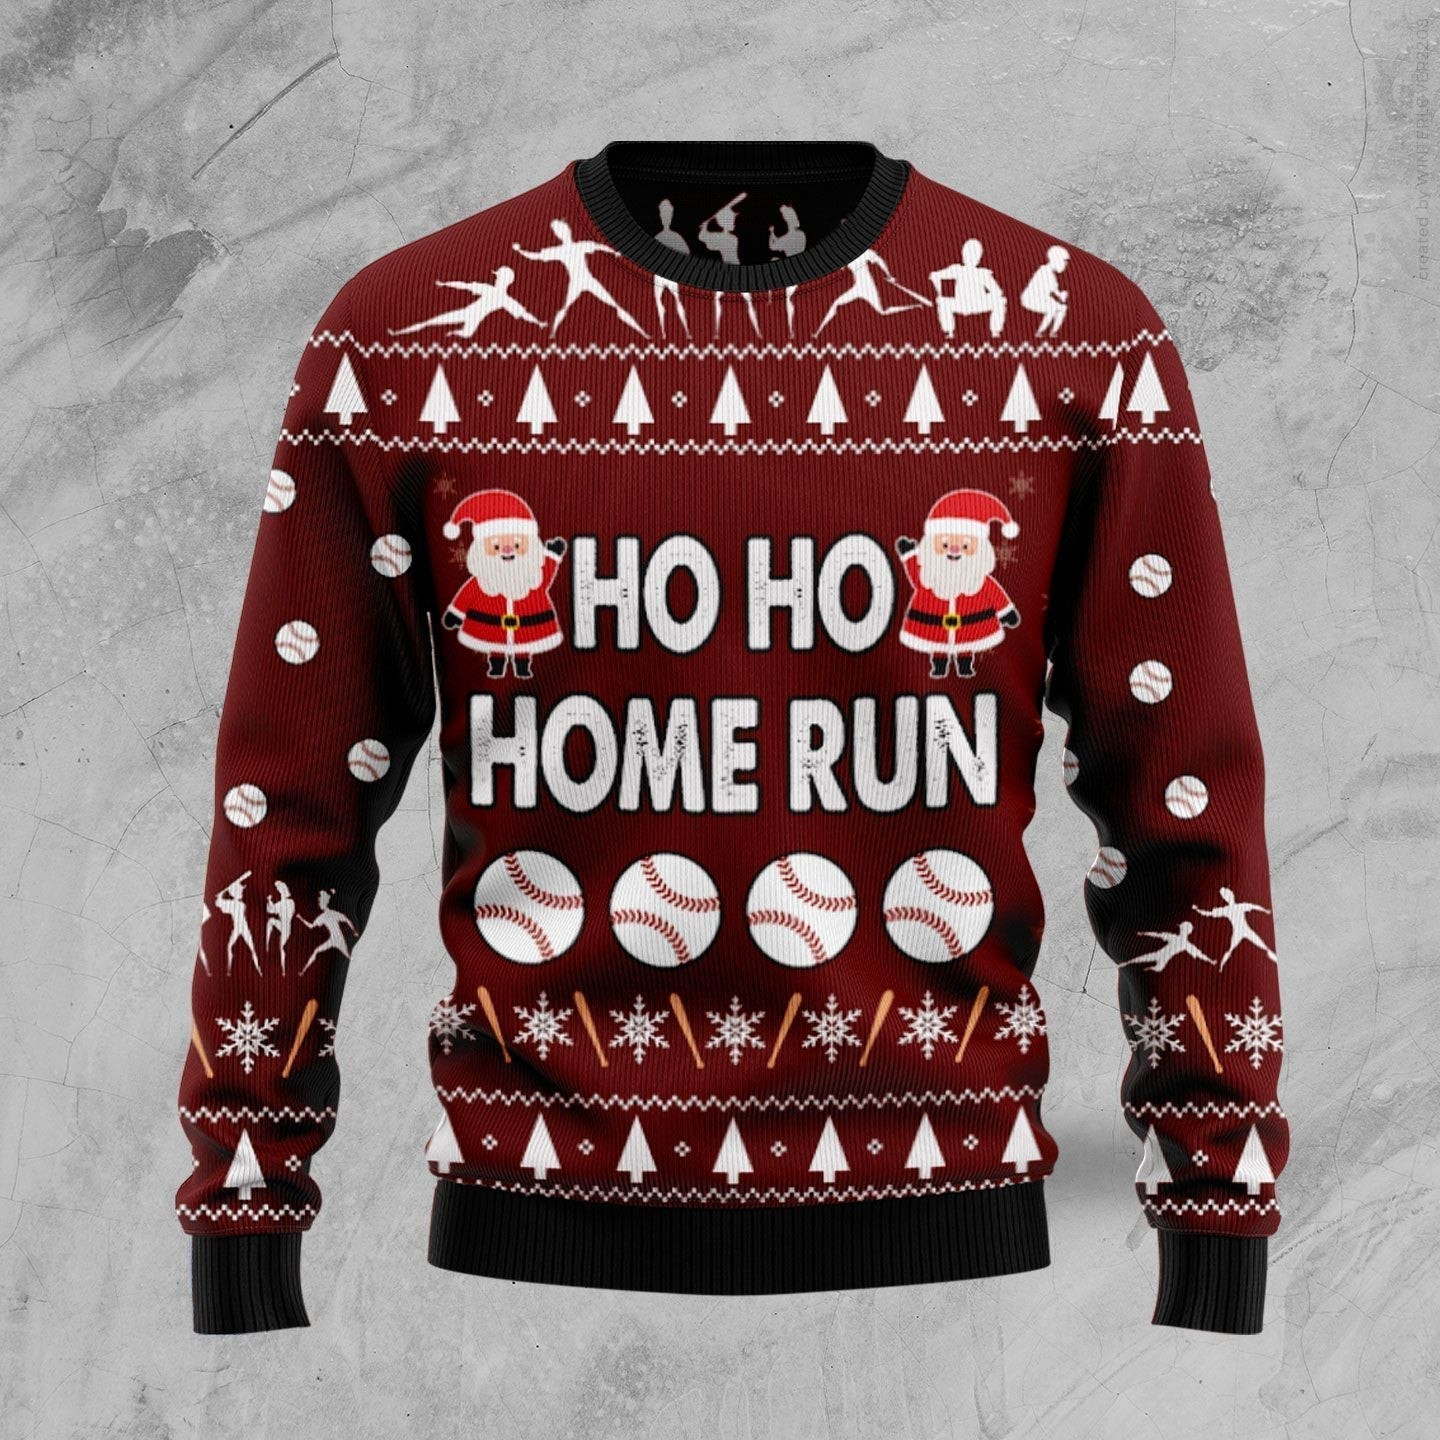 Baseball Hoho Home Run Ugly Christmas Sweater